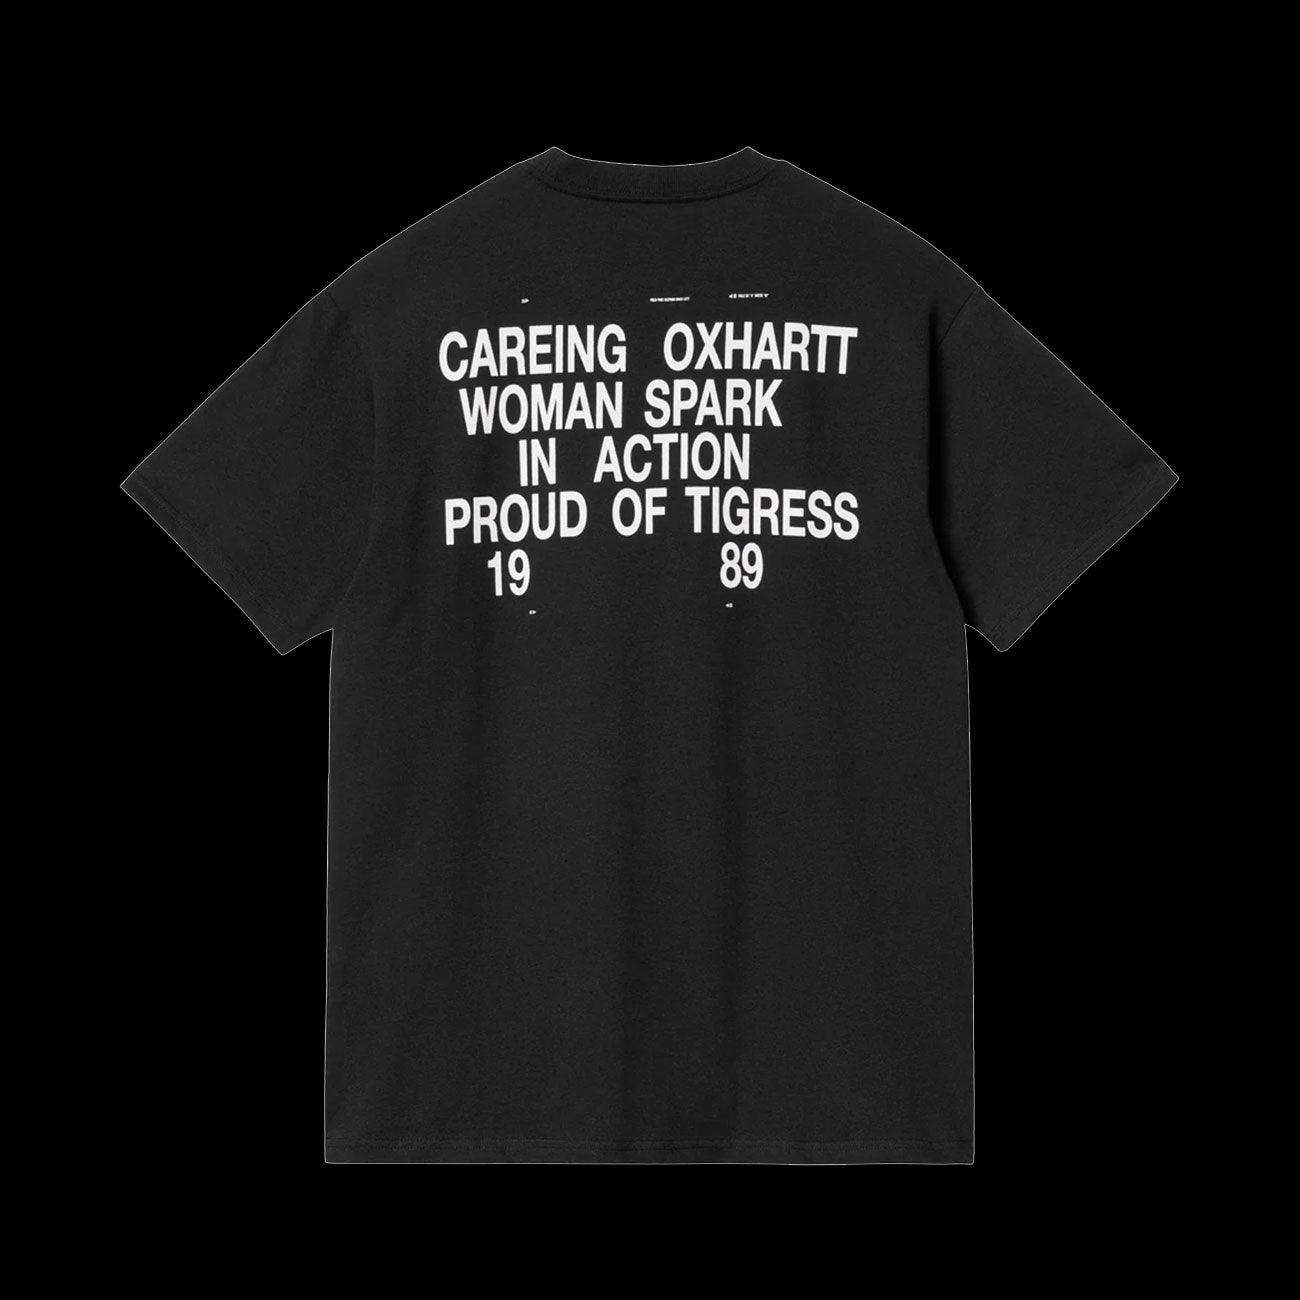 Carhartt WIP Fold-In T-Shirt (Black)